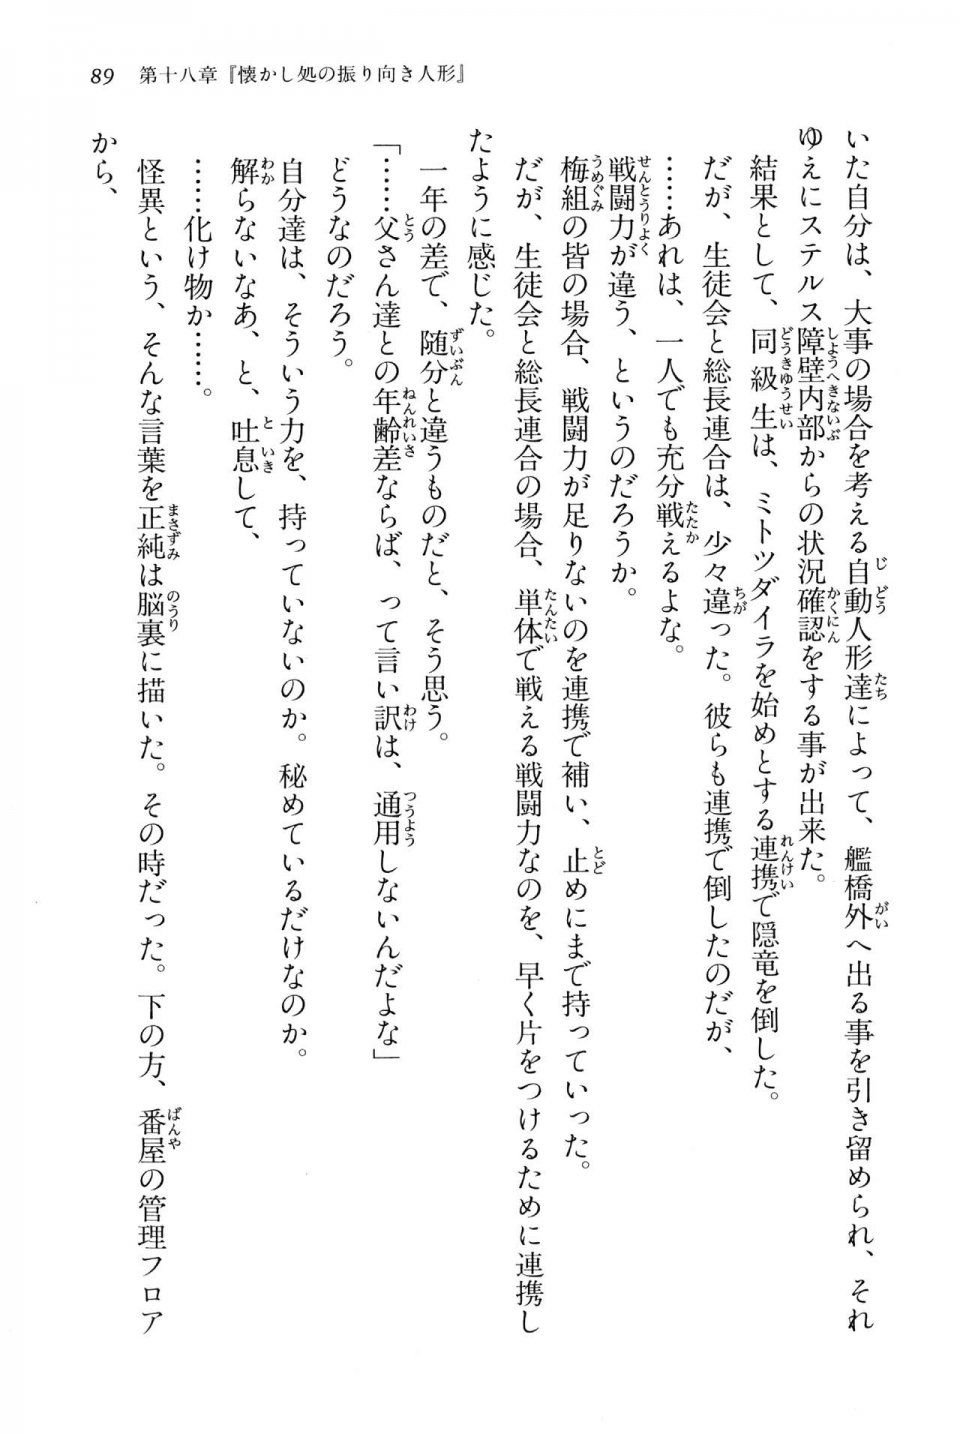 Kyoukai Senjou no Horizon BD Special Mininovel Vol 4(2B) - Photo #93